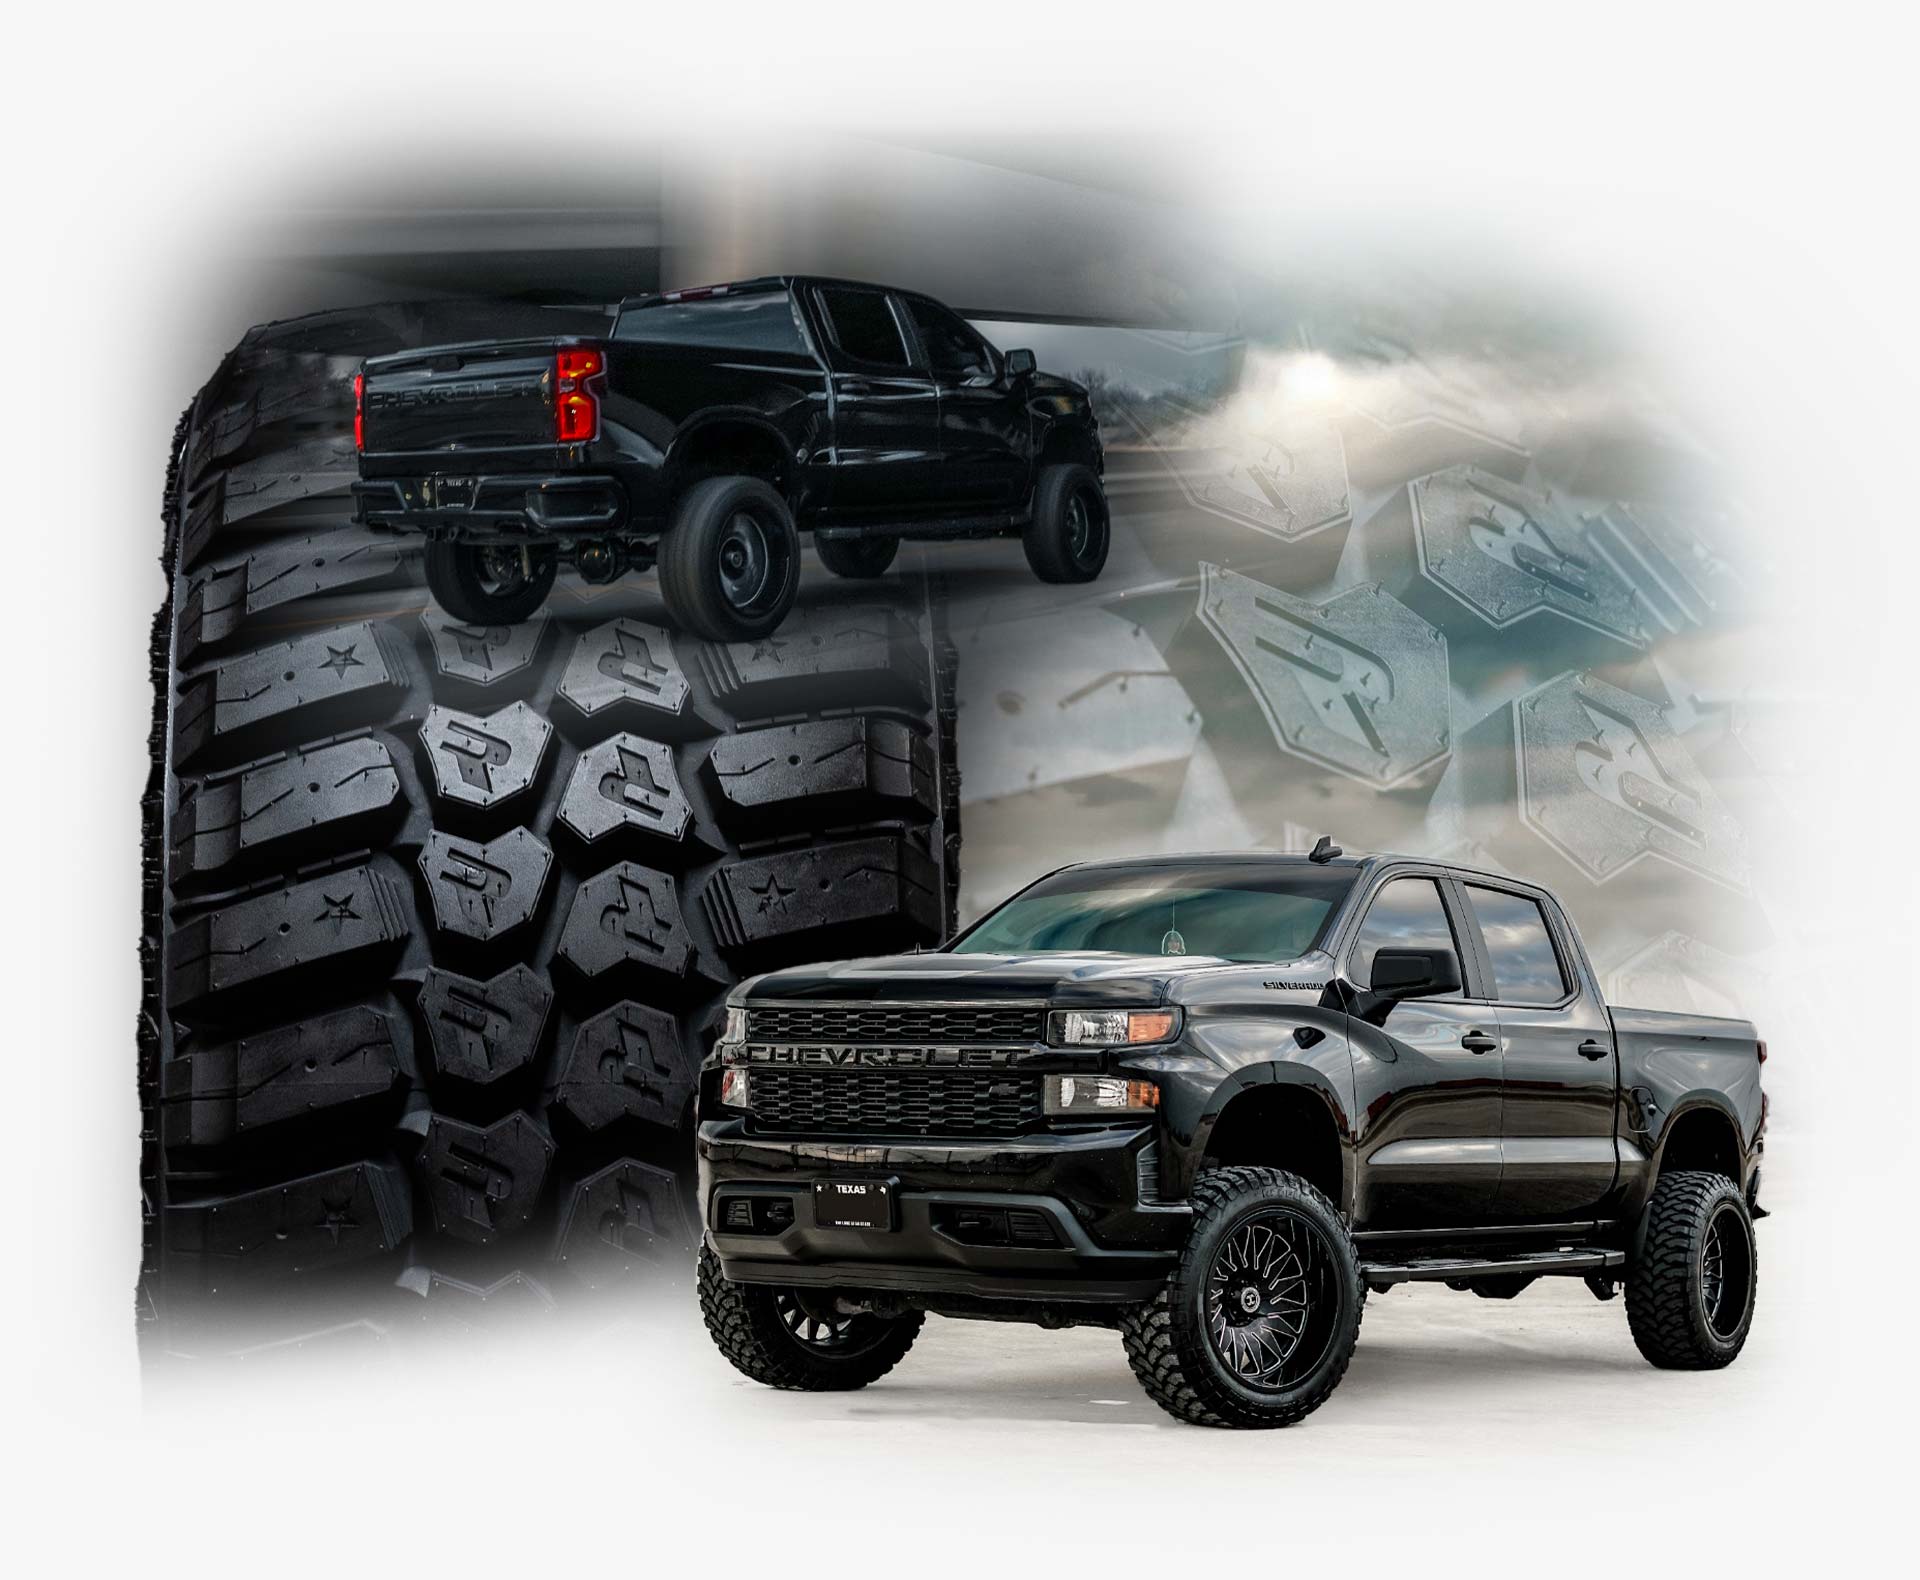 A graphic design image of RBP tires and a Chevy Silverado